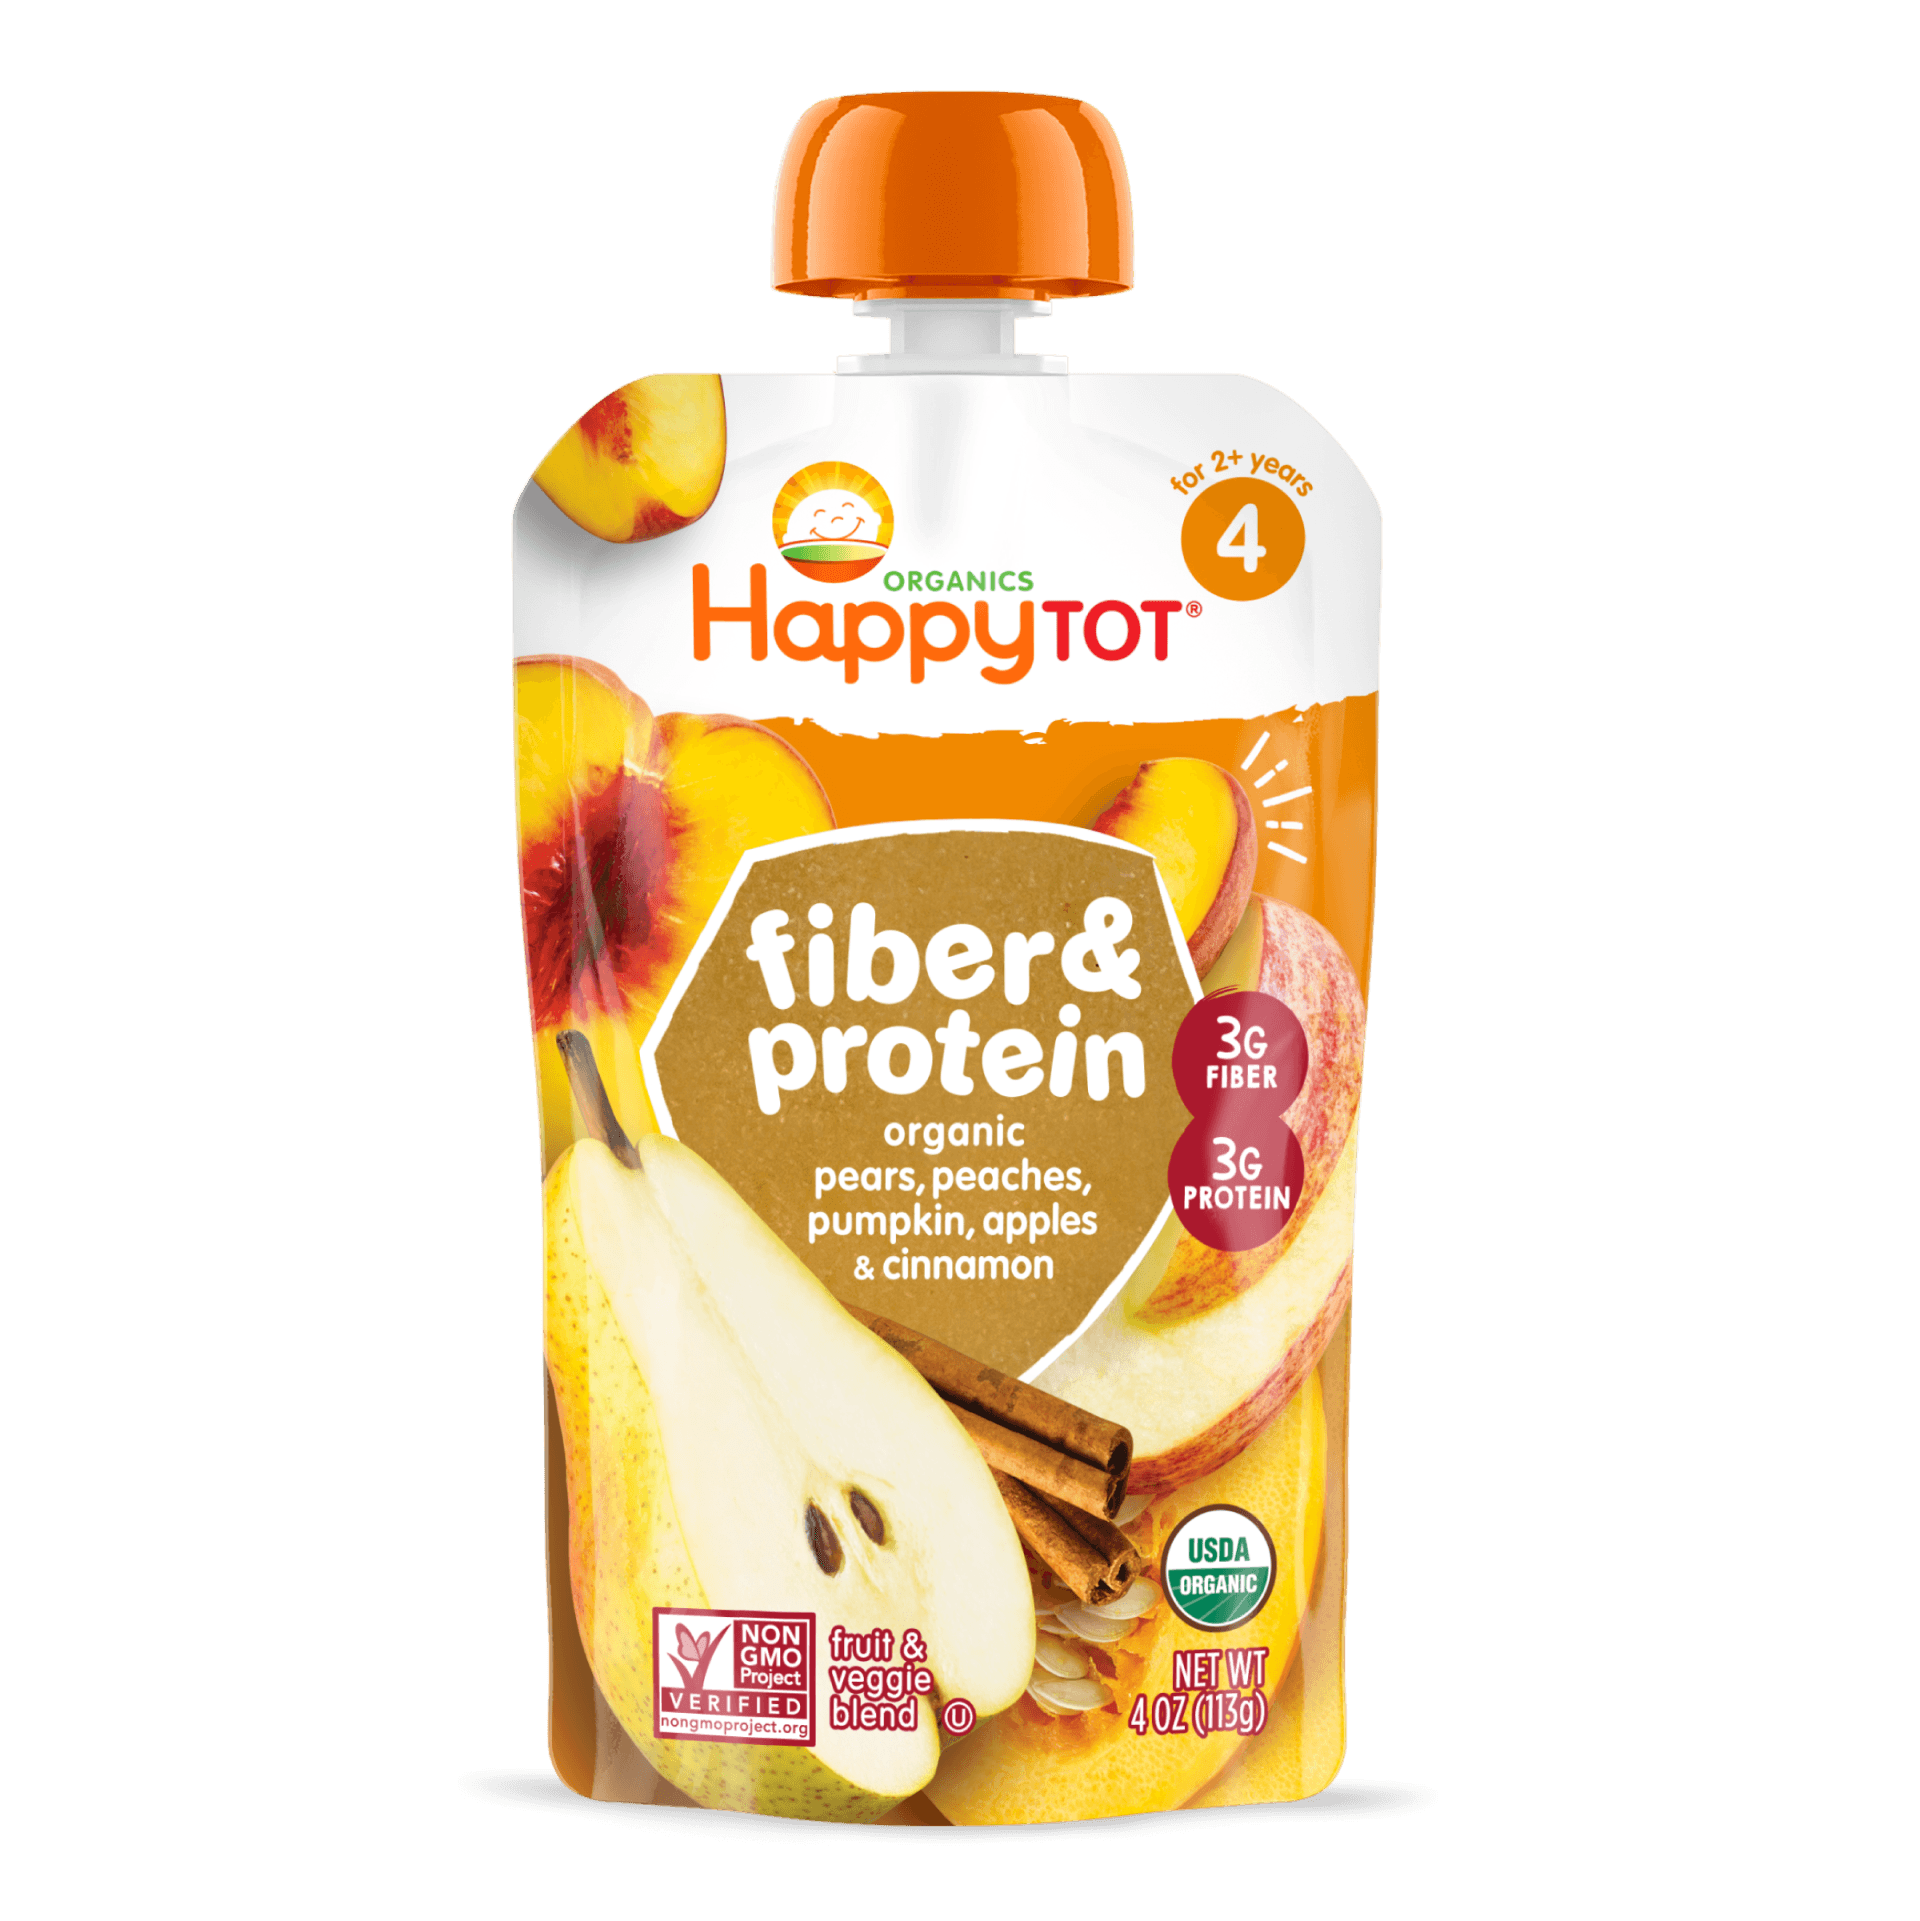 Happy Tot S4 - Fiber & Protein Organic Pears, Apples, Peaches, Pumpkin 4Oz pouch 16 units per case 4.0 oz